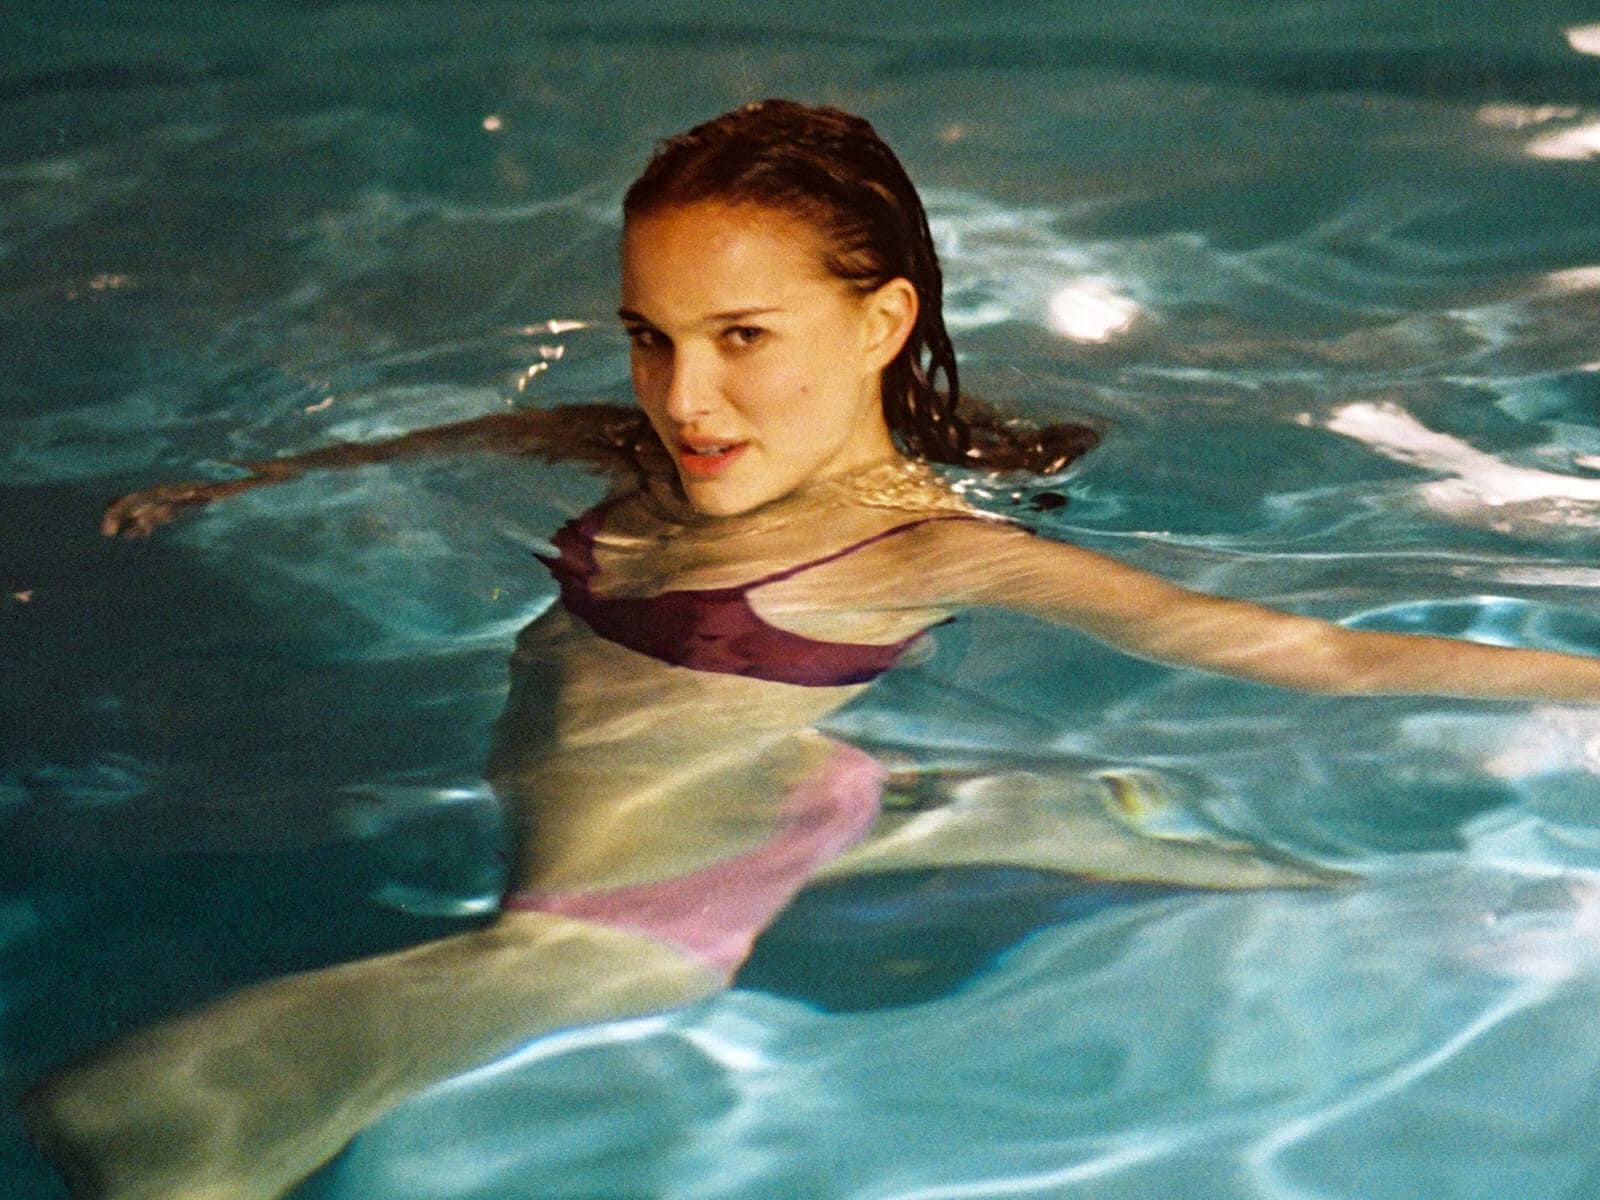 40 Hottest Bikini Pictures Of Natalie Portman Prove She Is A Goddess | Best Of Comic Books